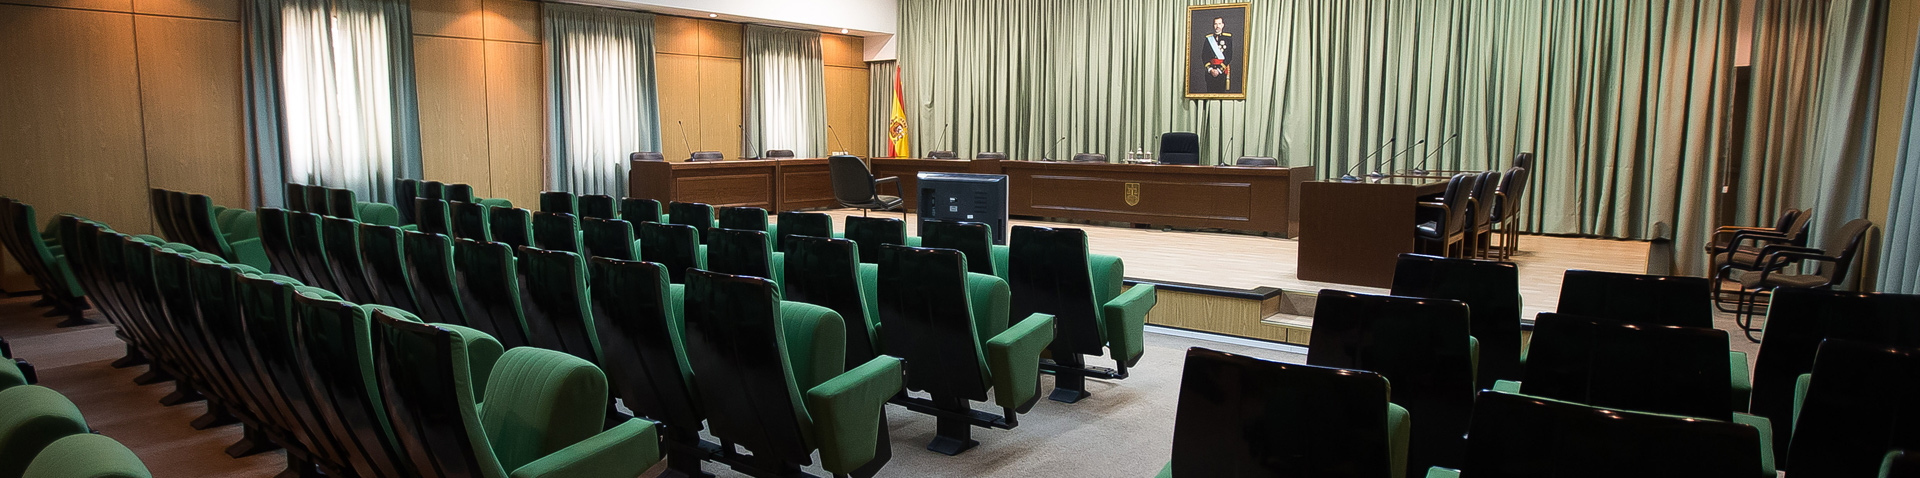 Sala de organo judicial